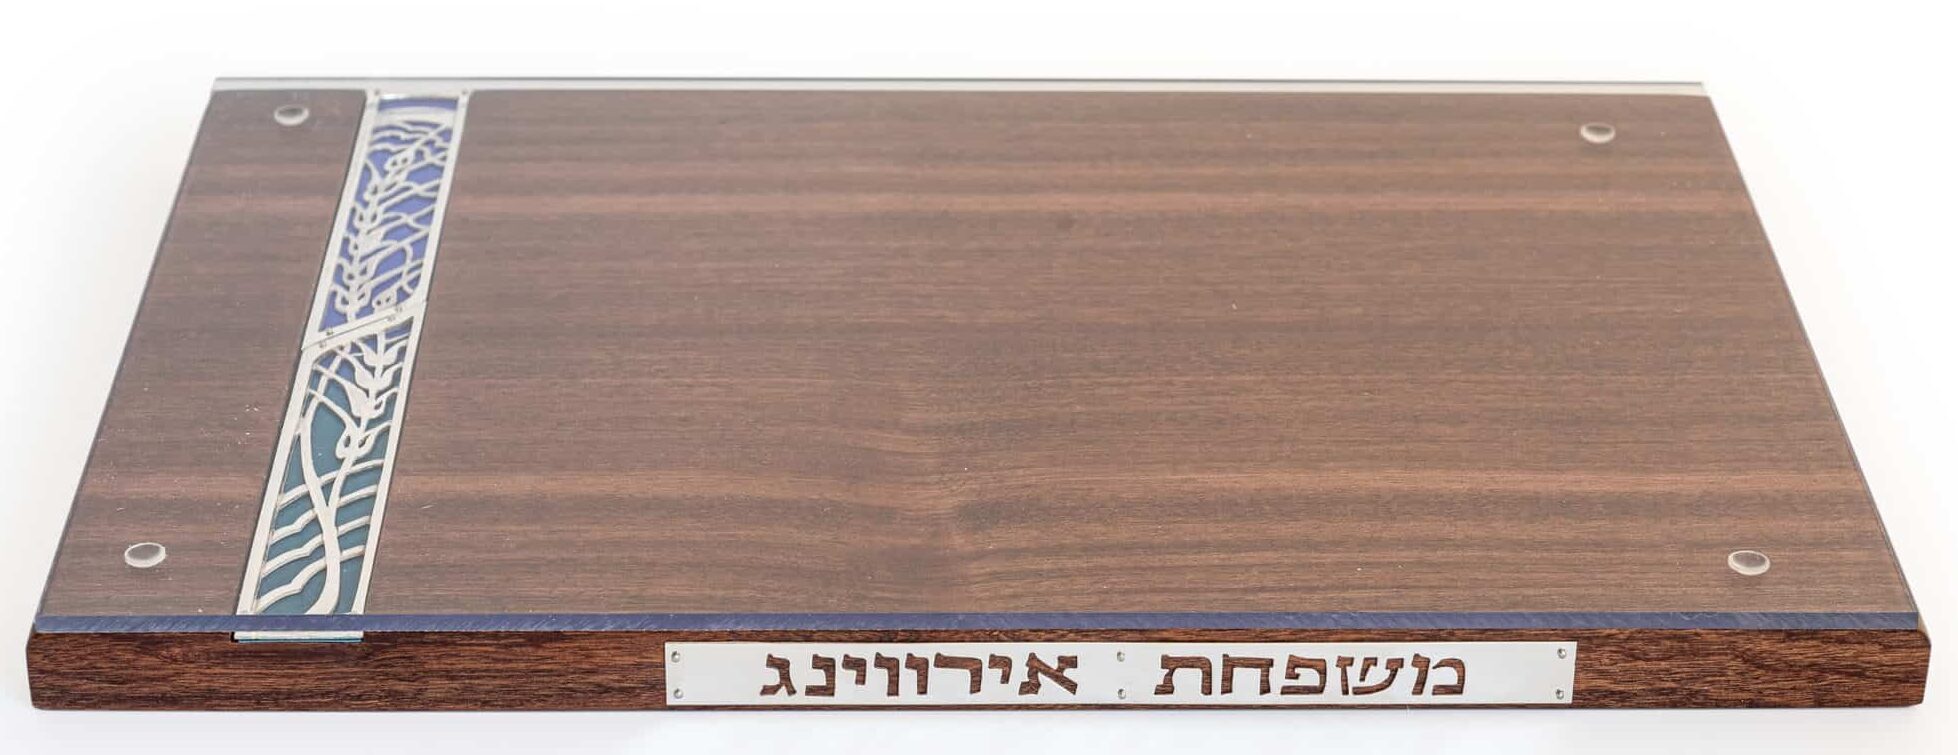 Custom Made Challah and Knife Set for Shabbat